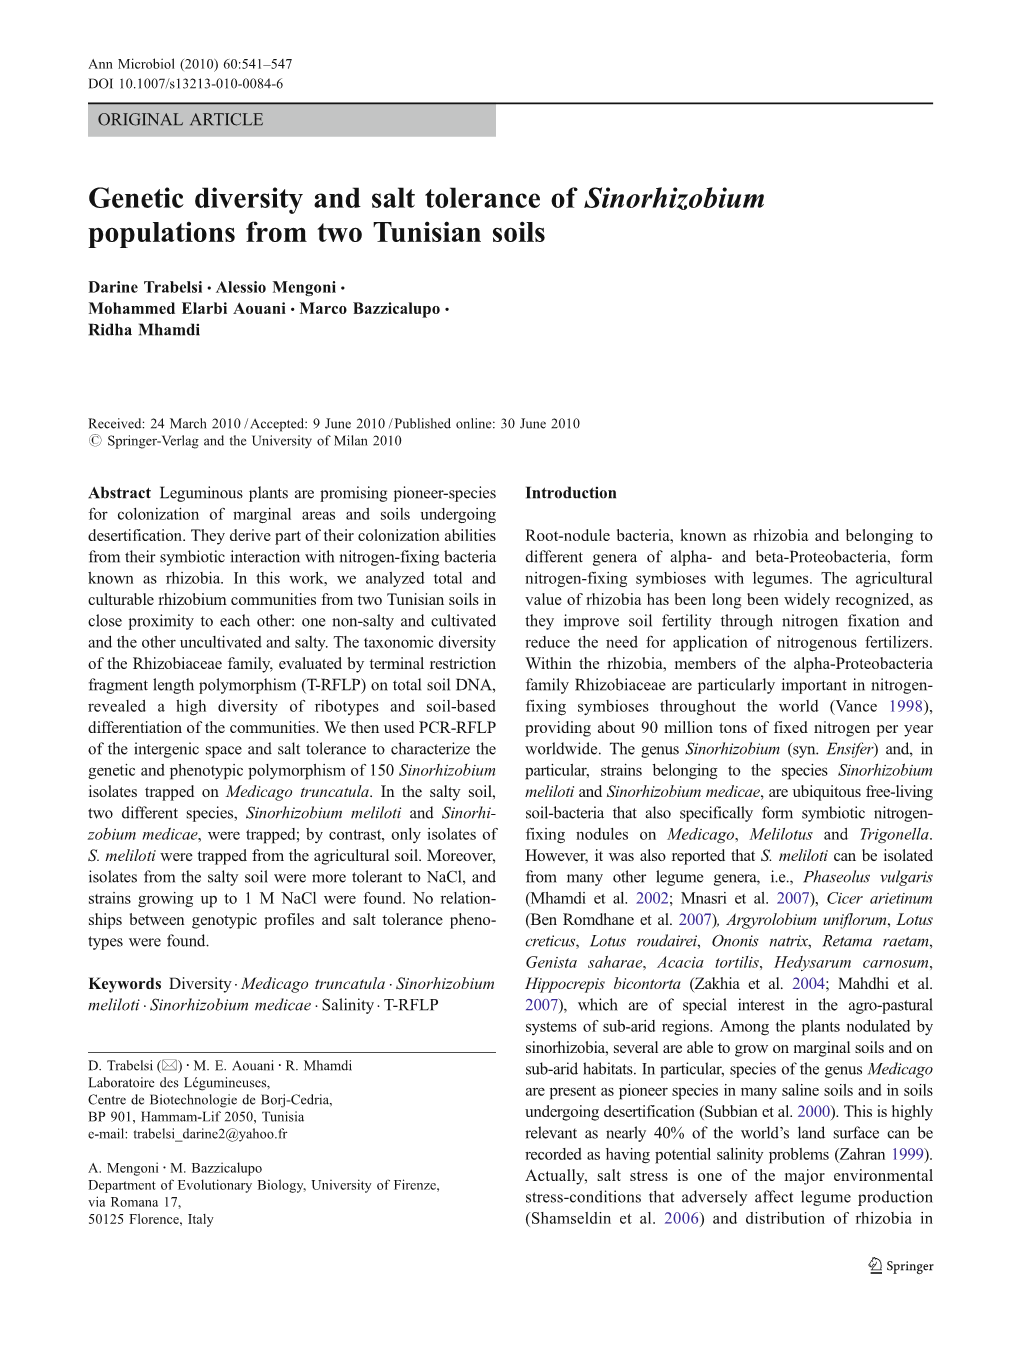 Genetic Diversity and Salt Tolerance of Sinorhizobium Populations from Two Tunisian Soils